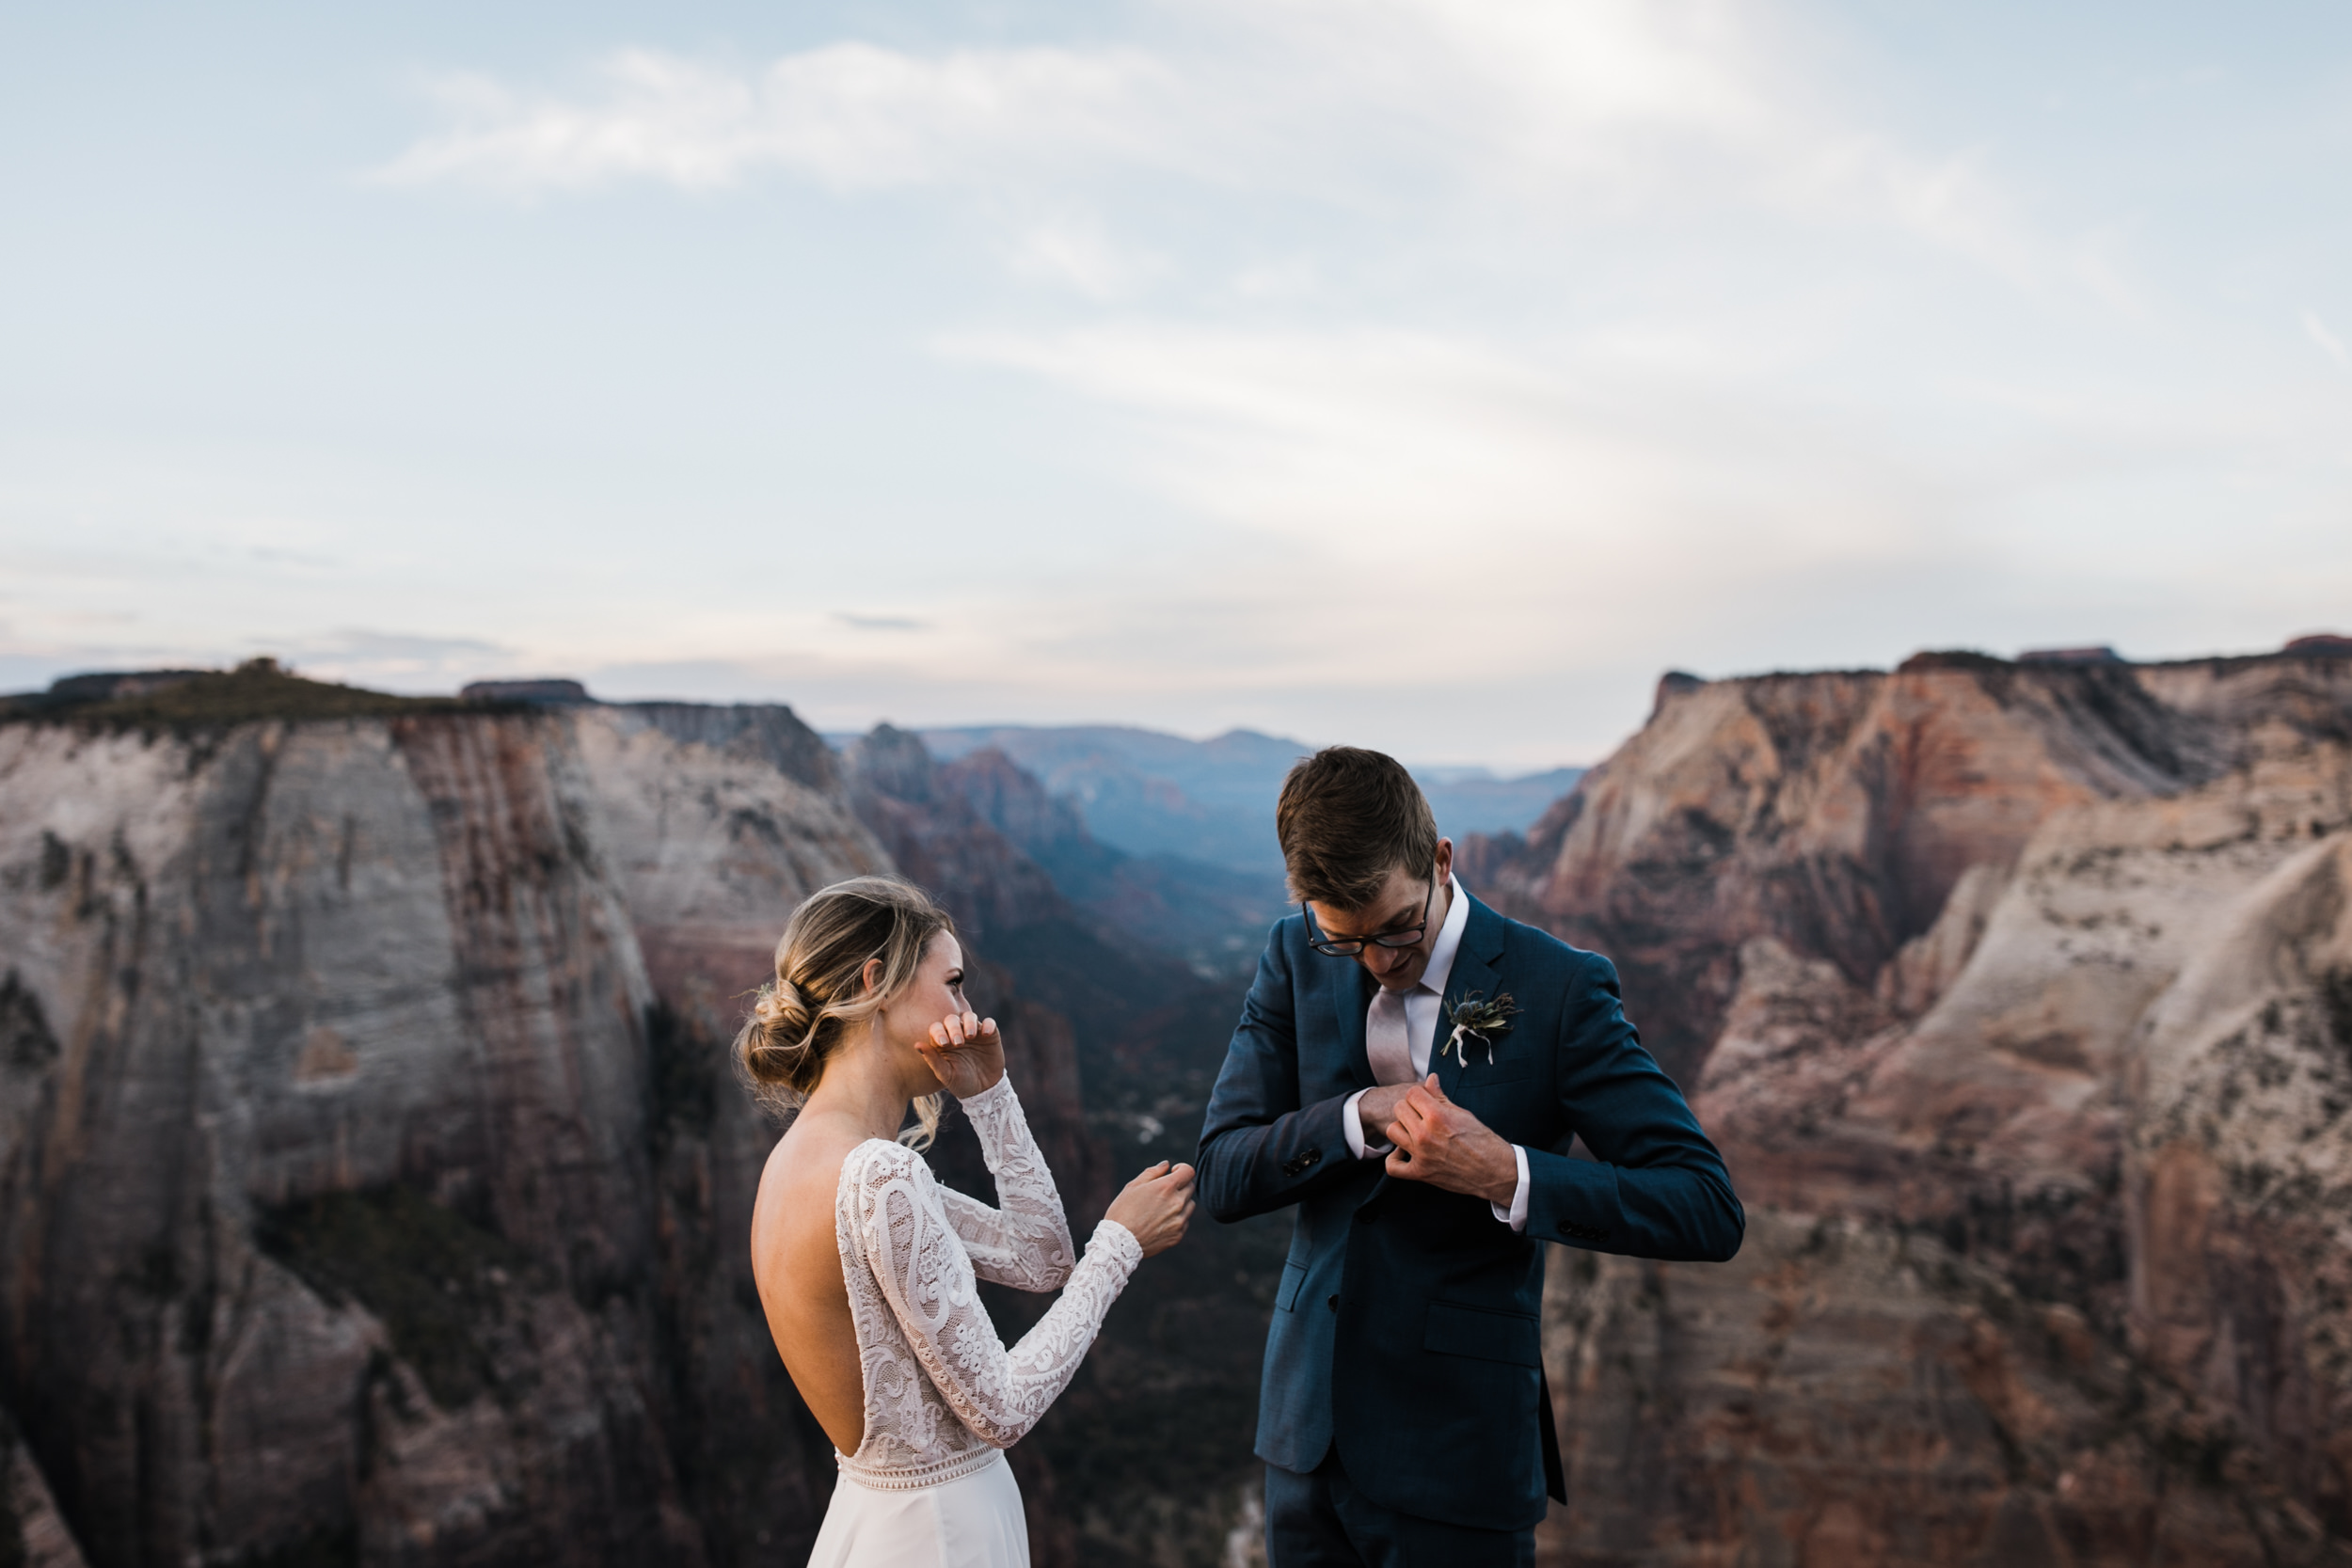 erin + marshall’s sunrise elopement ceremony overlooking zion national park | hiking wedding | utah elopement photographer | the hearnes adventure photography